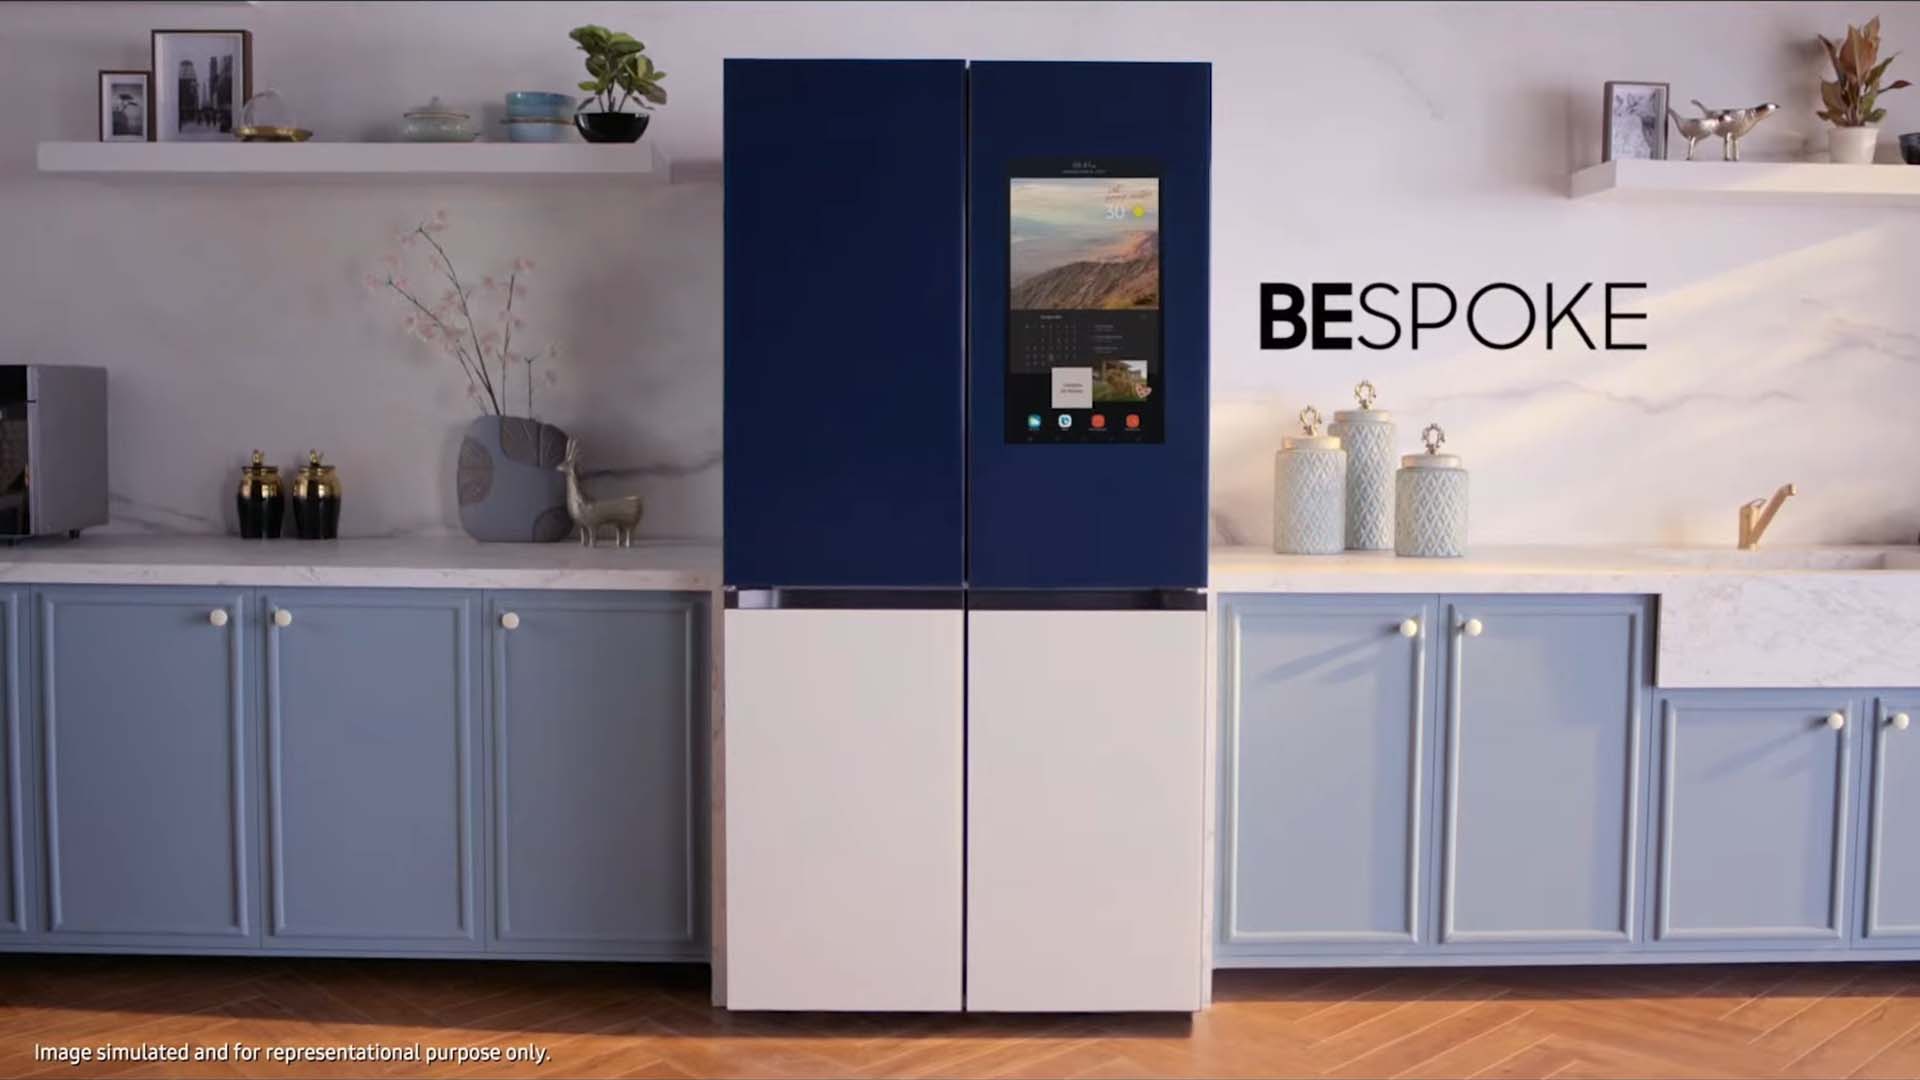 https://www.sammobile.com/wp-content/uploads/2021/10/Samsung-Bespoke-Refrigerator-2021.jpg